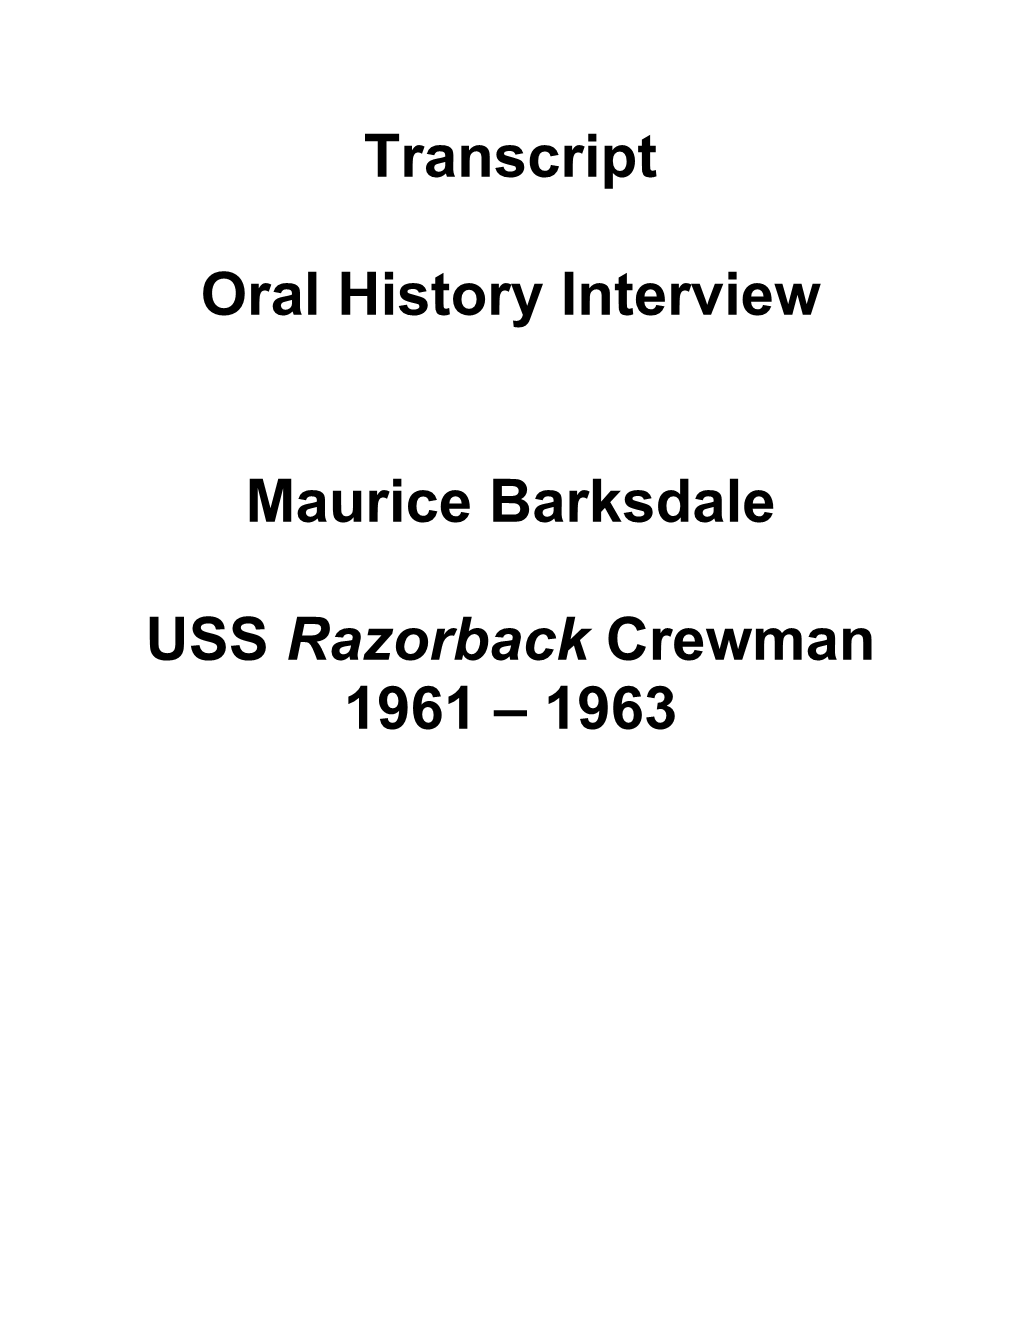 Transcript Oral History Interview Maurice Barksdale USS Razorback